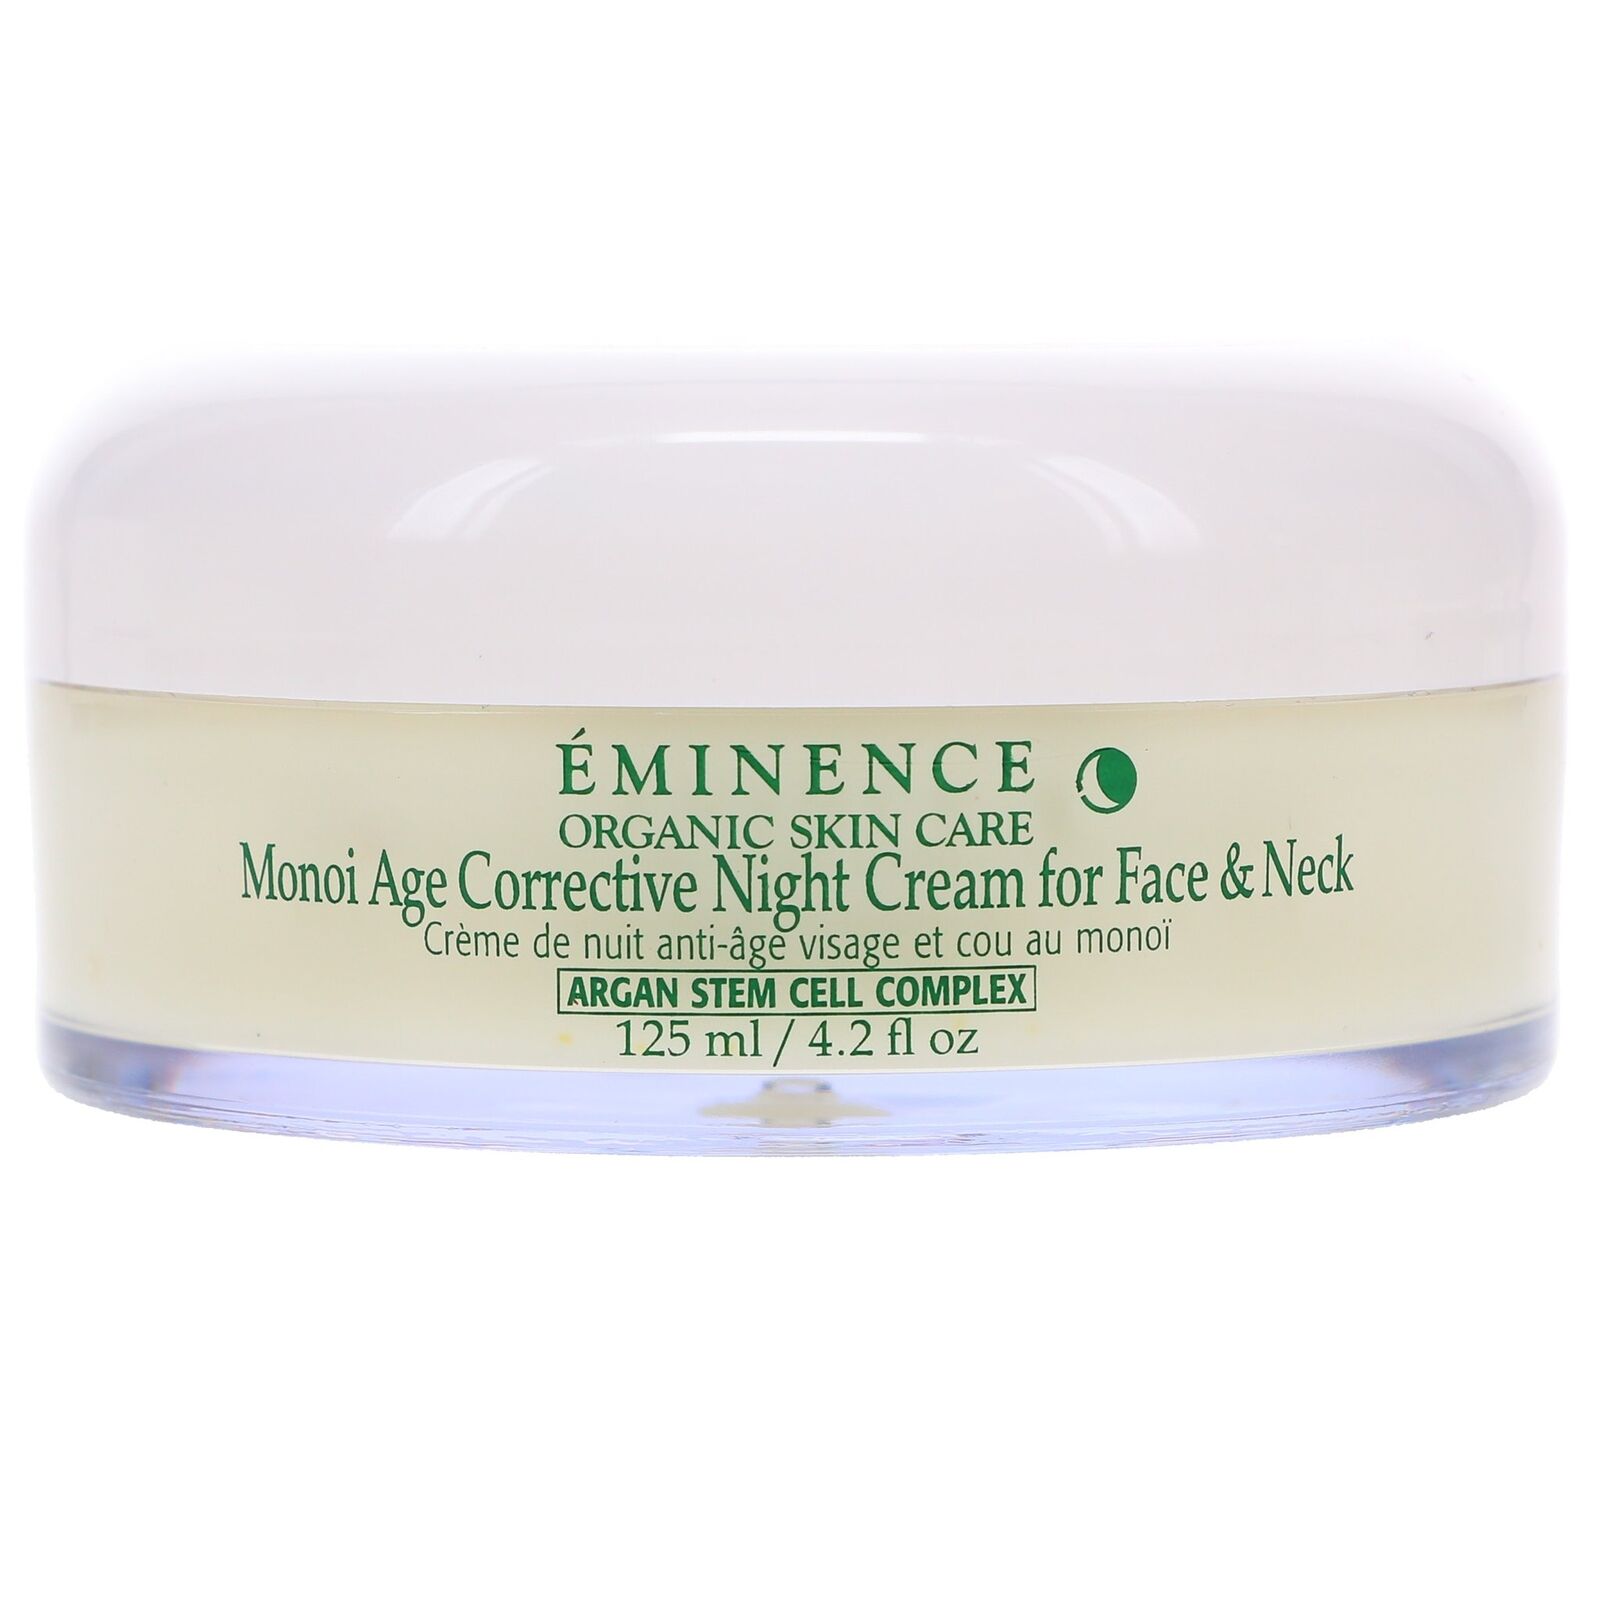 Eminence Monoi Age Corrective Night Cream for Face & Neck (4.2oz/125ml) *NEW